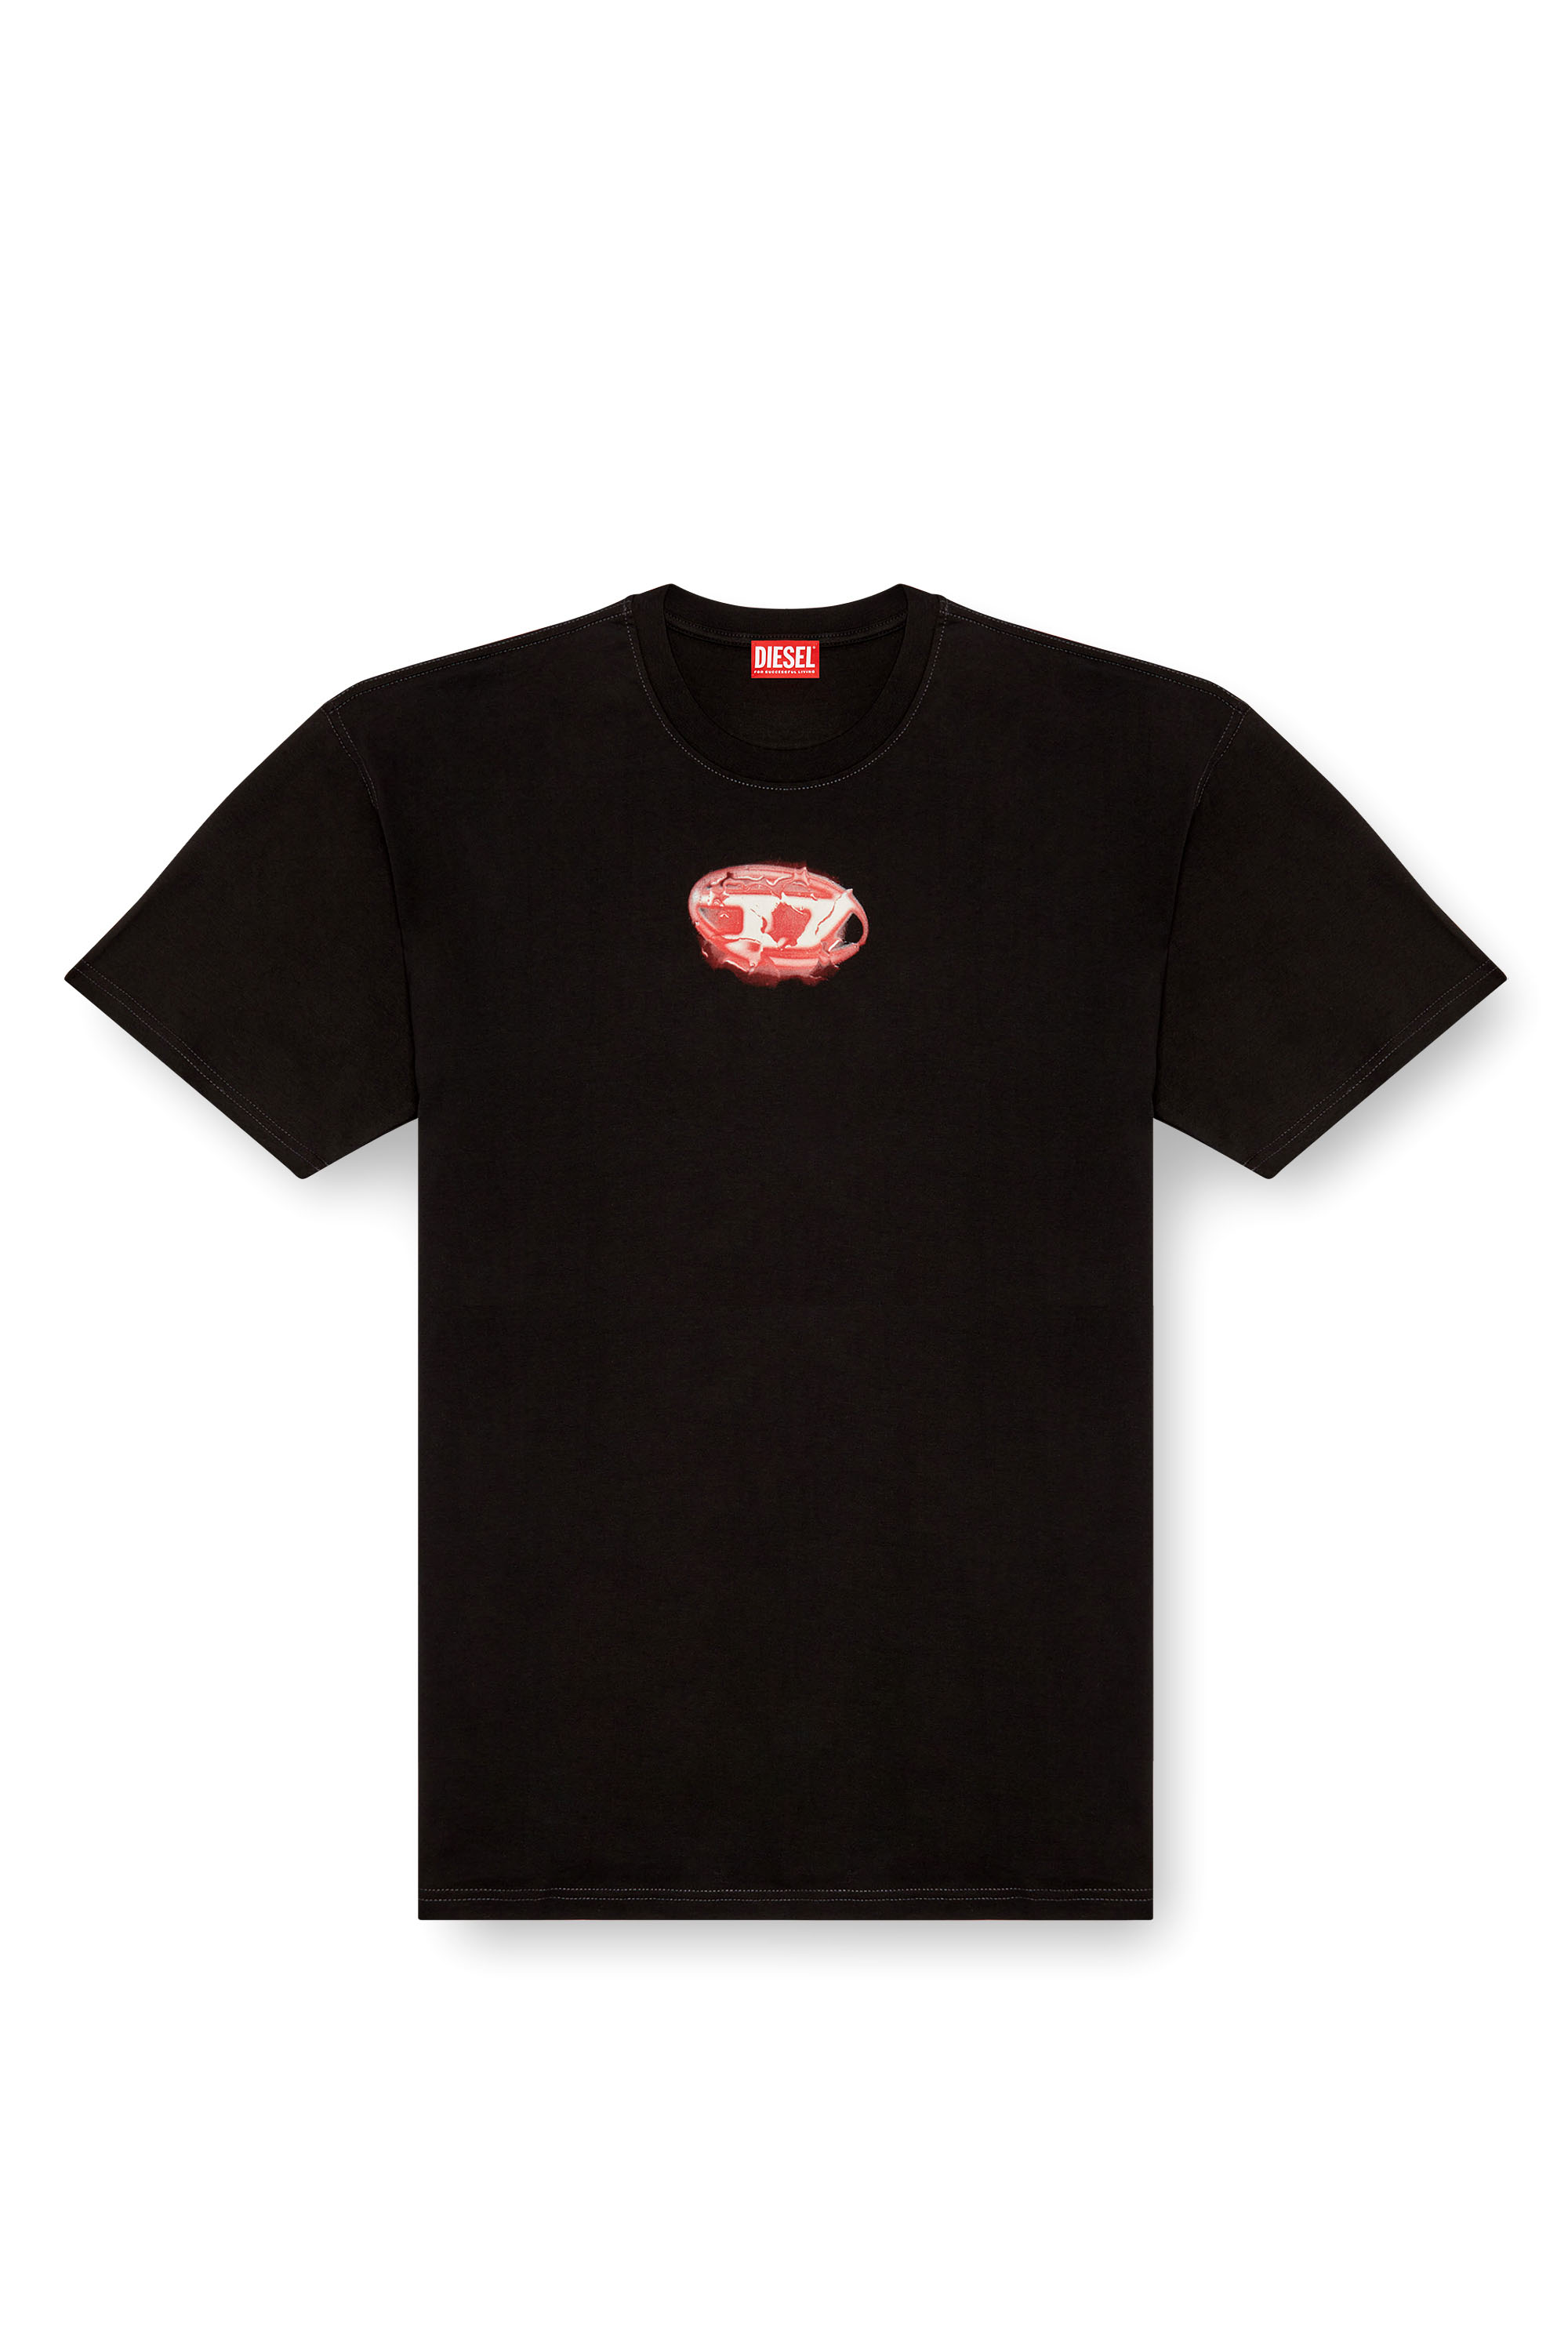 Diesel - T-BOXT-K3, Homme T-shirt avec logo effet lumineux in Noir - Image 3